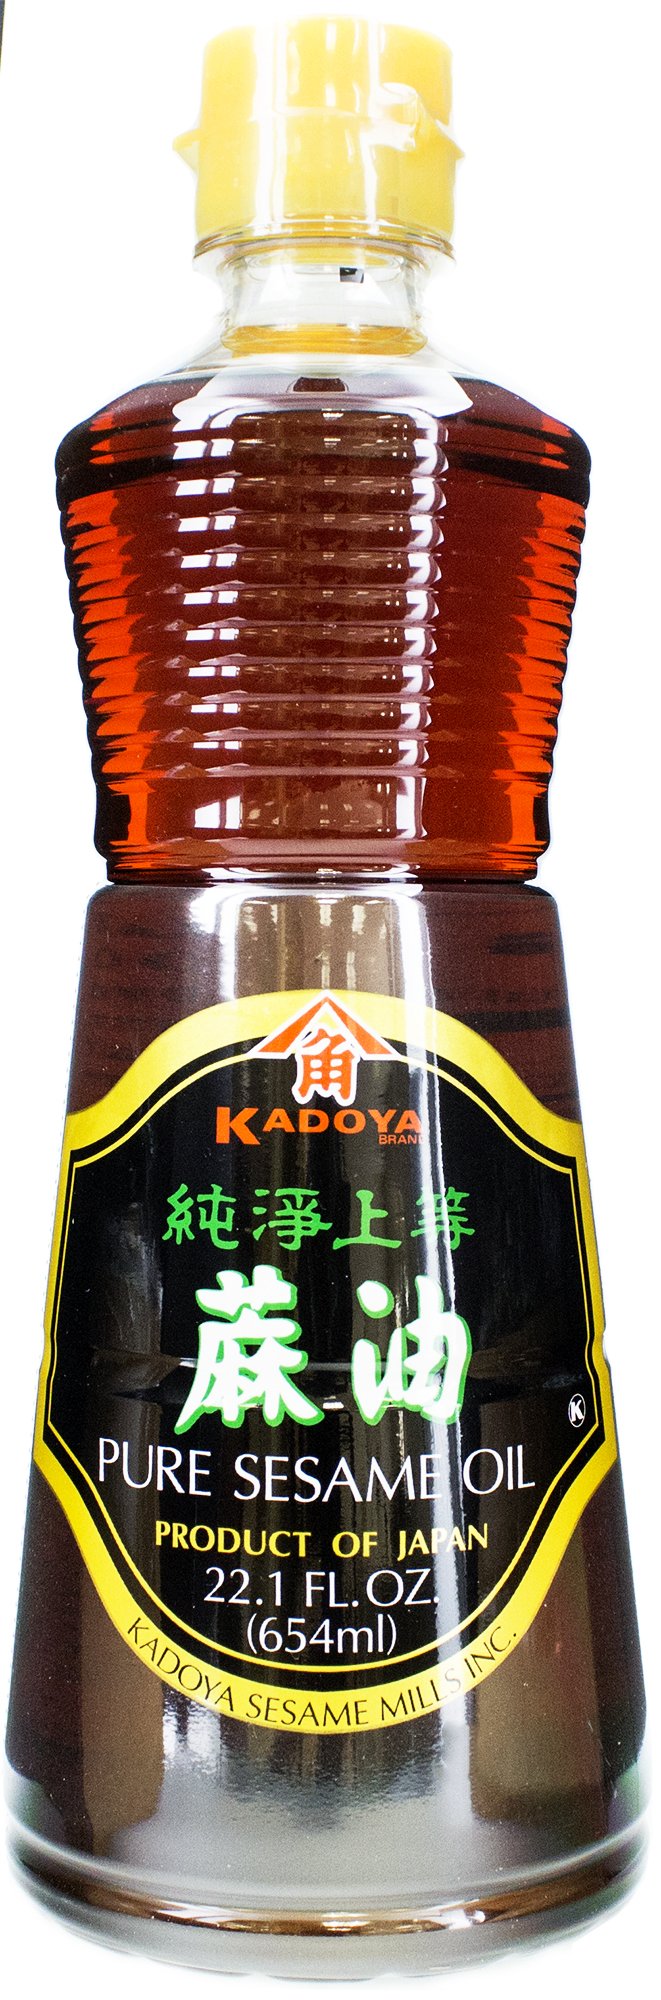 Kadoya Sesame Oil, 22.10 Fl Oz~$9.92 @ Amazon~Free Prime Shipping!